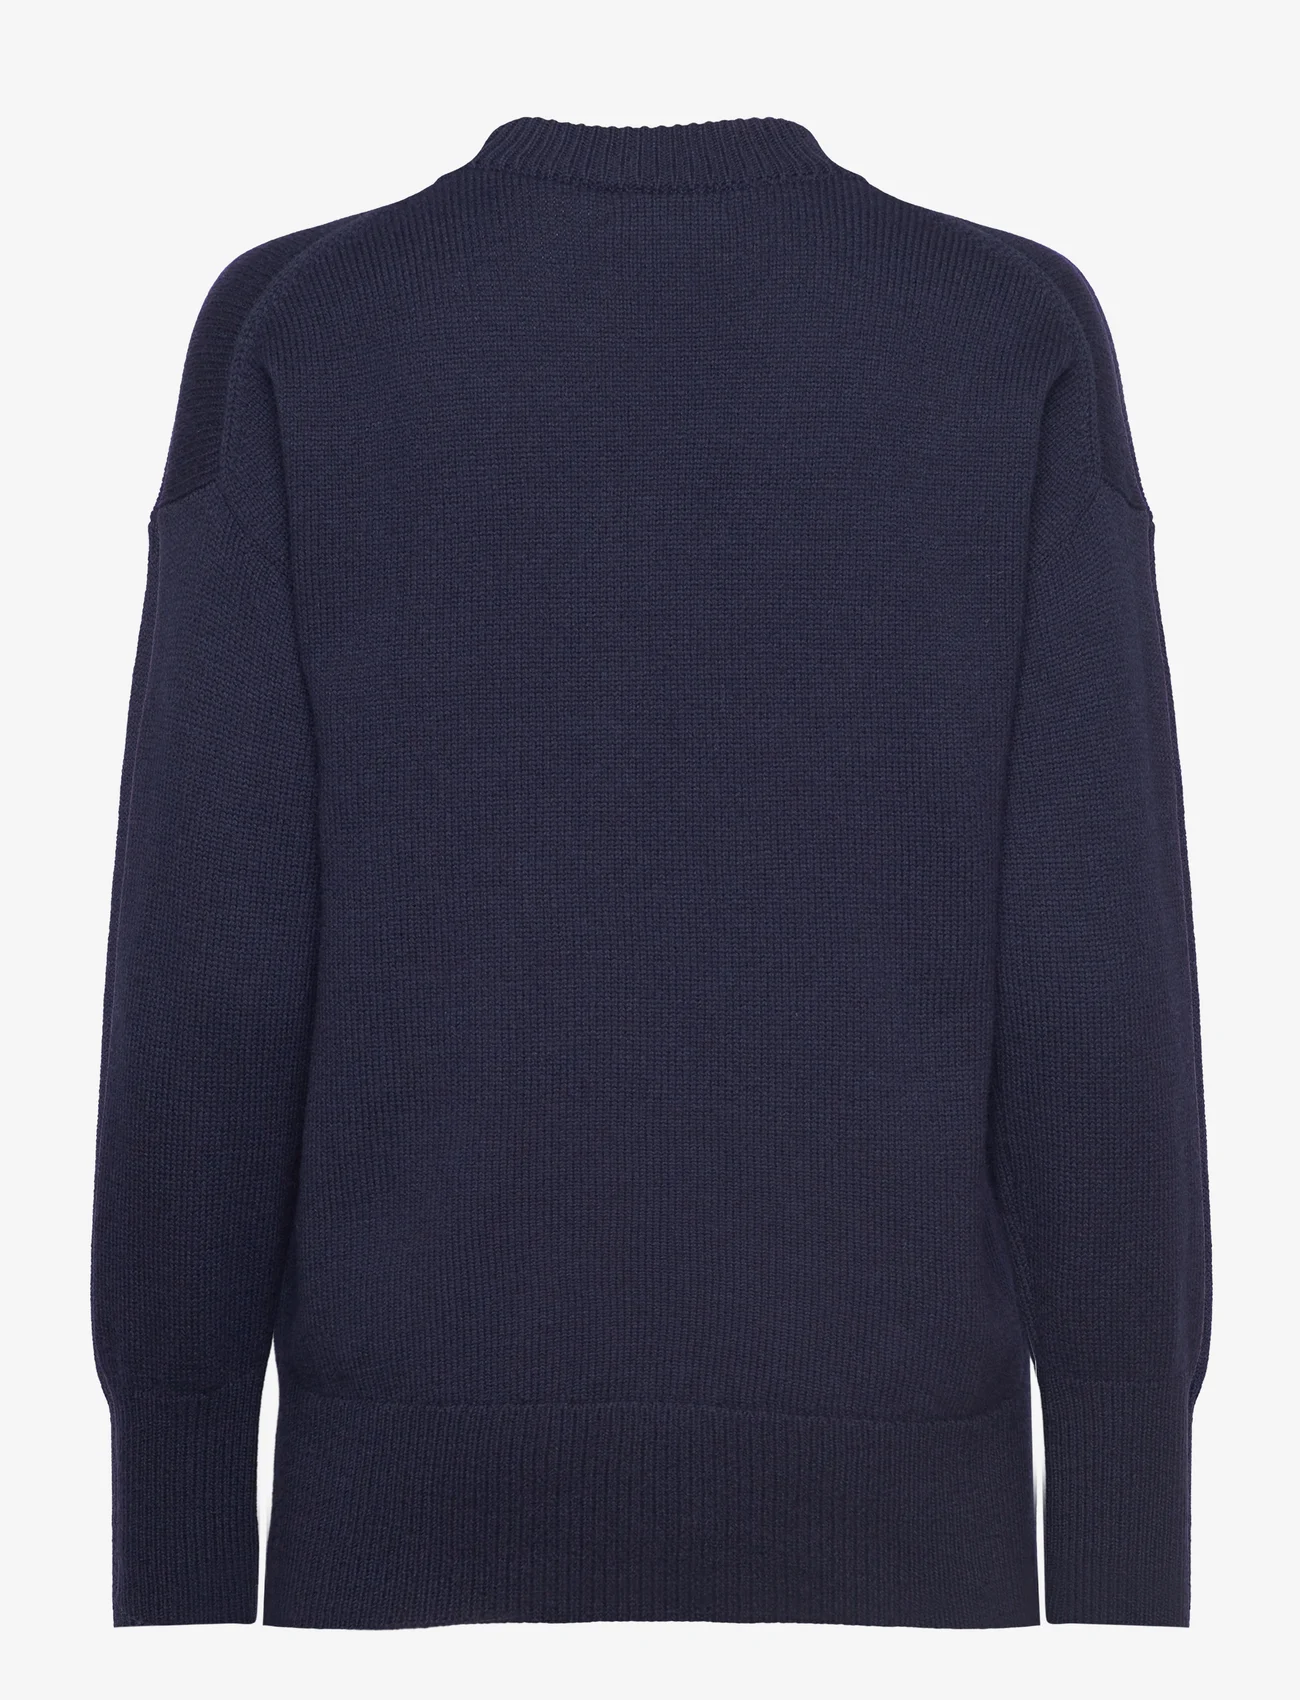 Andiata - Salome knit - trøjer - deep navy blue - 1